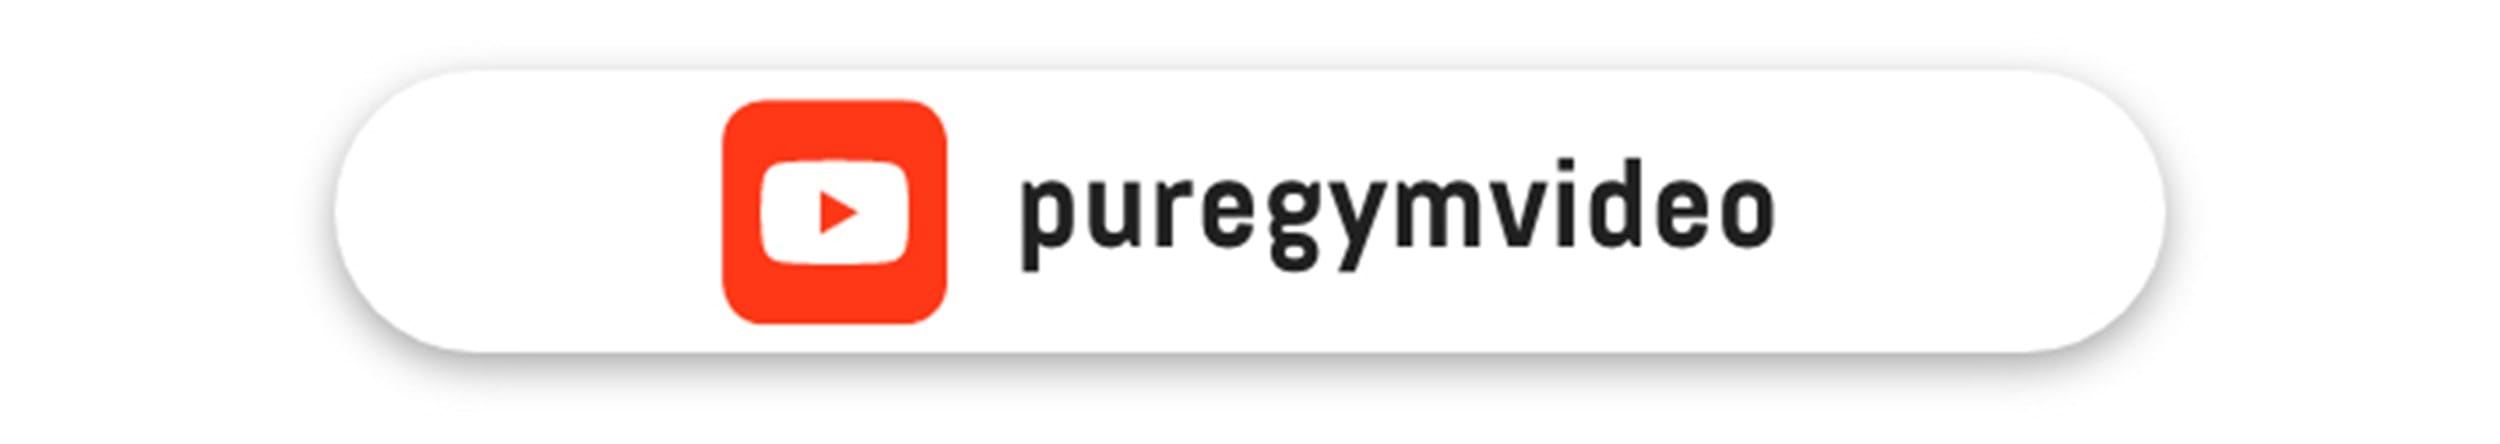 PureGym Youtube